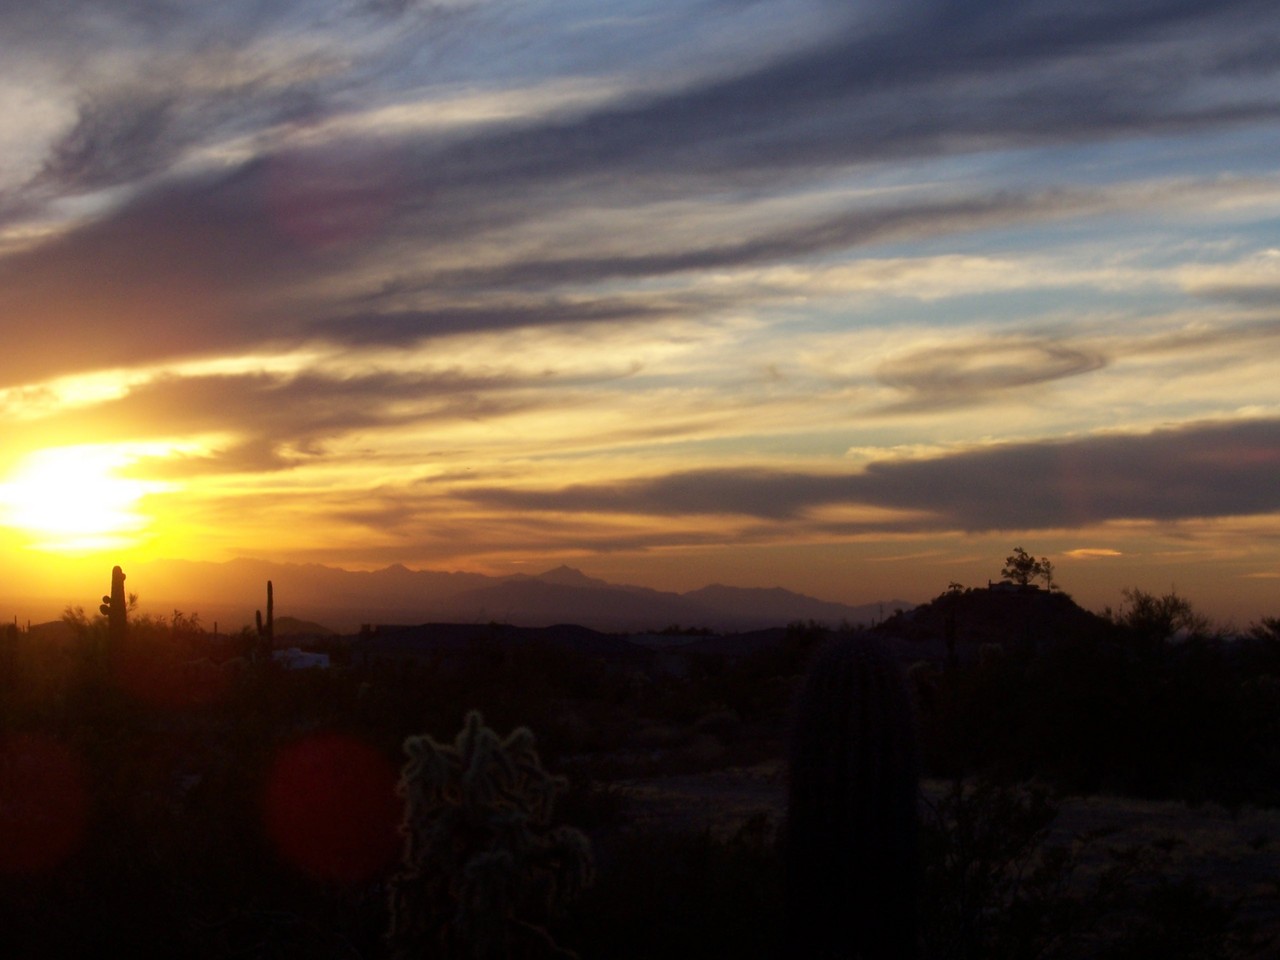 Mesa, AZ: January Sunset looking west over Mesa